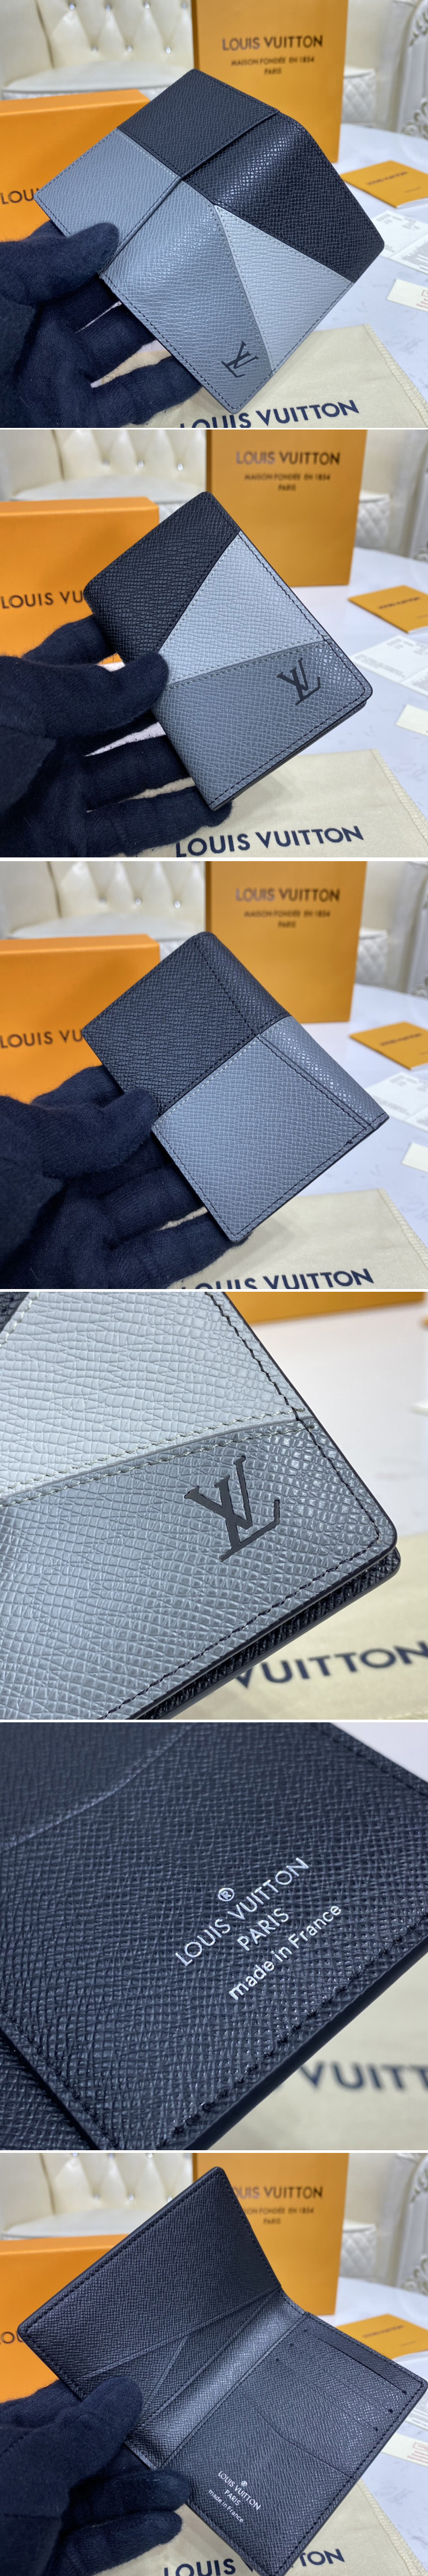 Replica Louis Vuitton M30729 LV Pocket Organizer Wallet in Gray monochrome Taiga leather